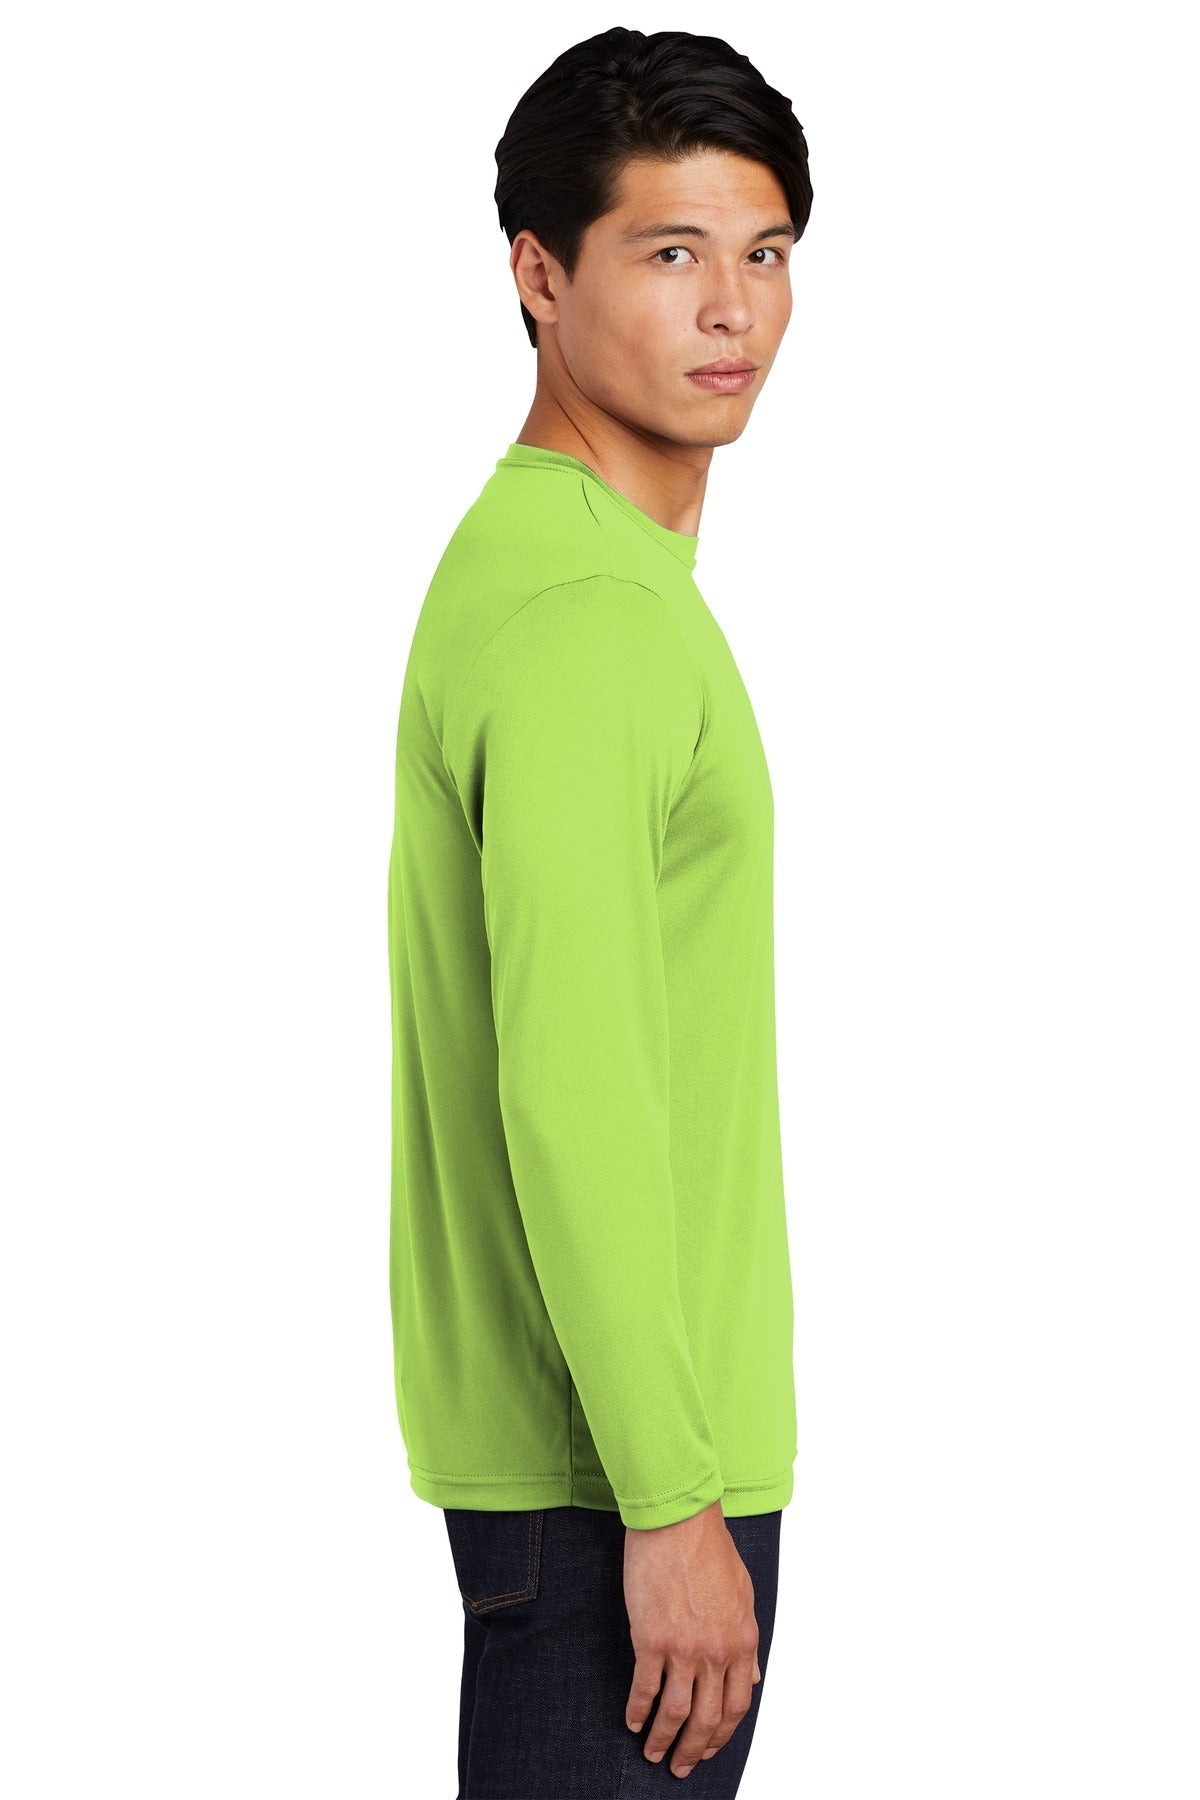 Sport-Tek Tall Long Sleeve PosiCharge Competitor Tee. TST350LS - BT Imprintables Shirts